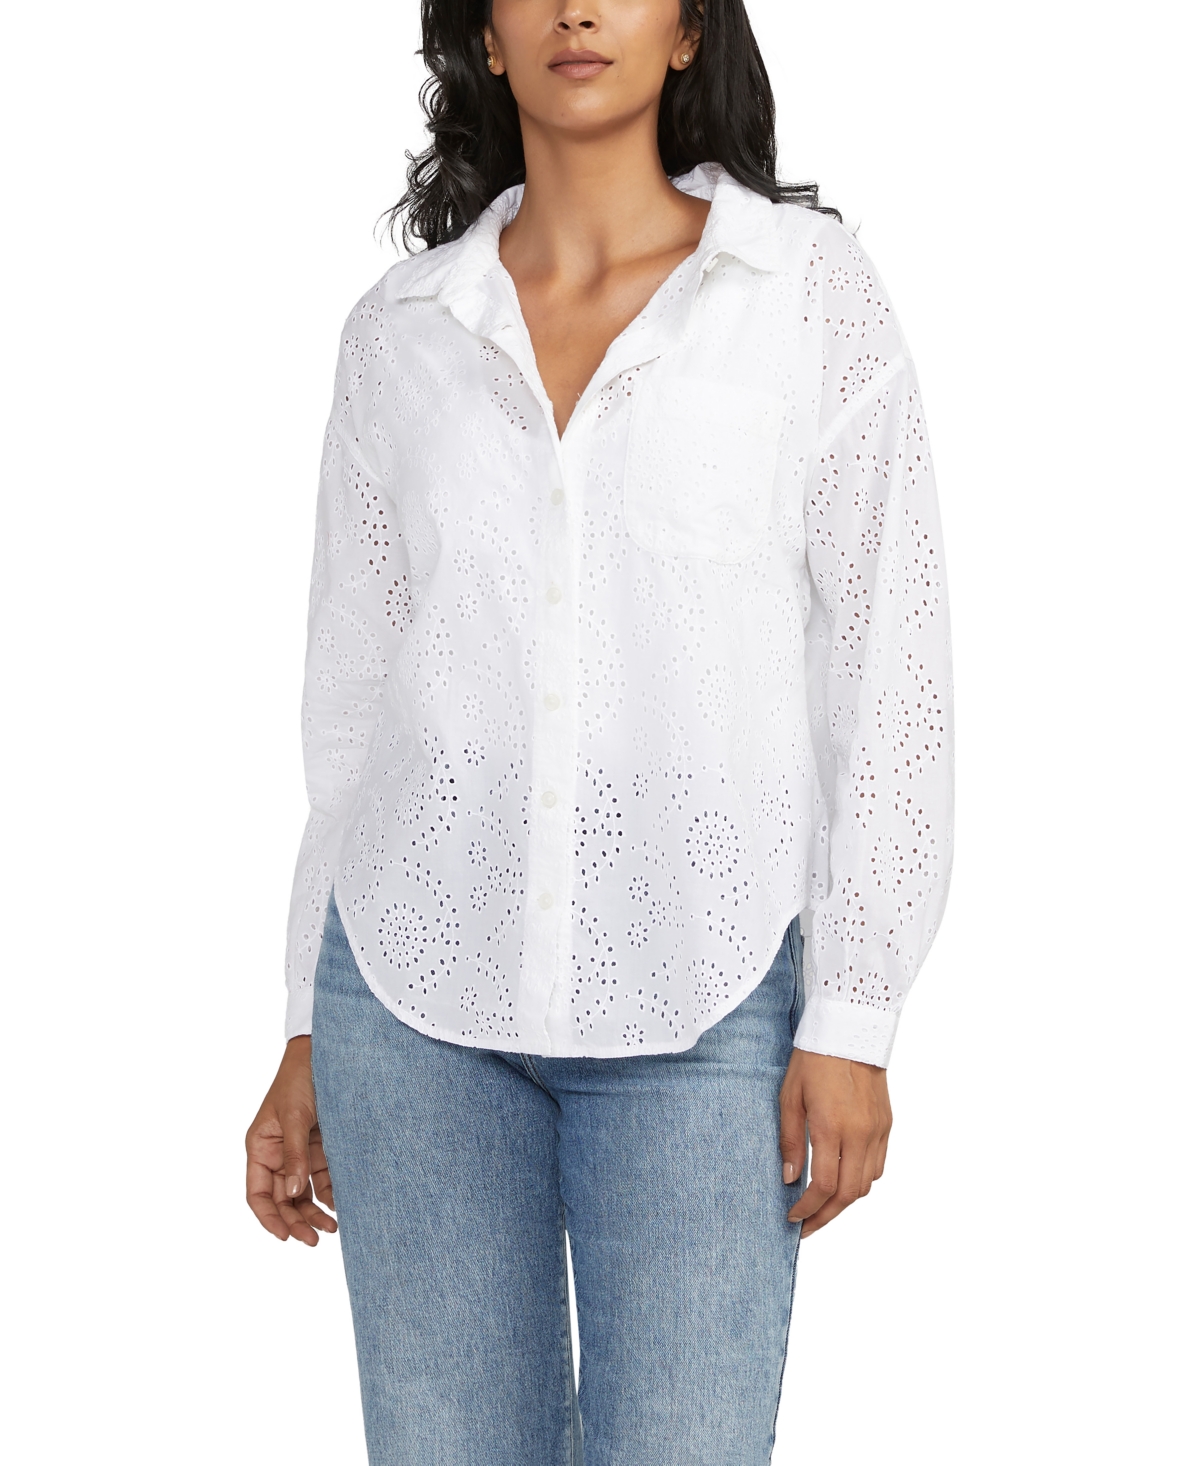 Women's Relaxed Button-Down Shirt - White